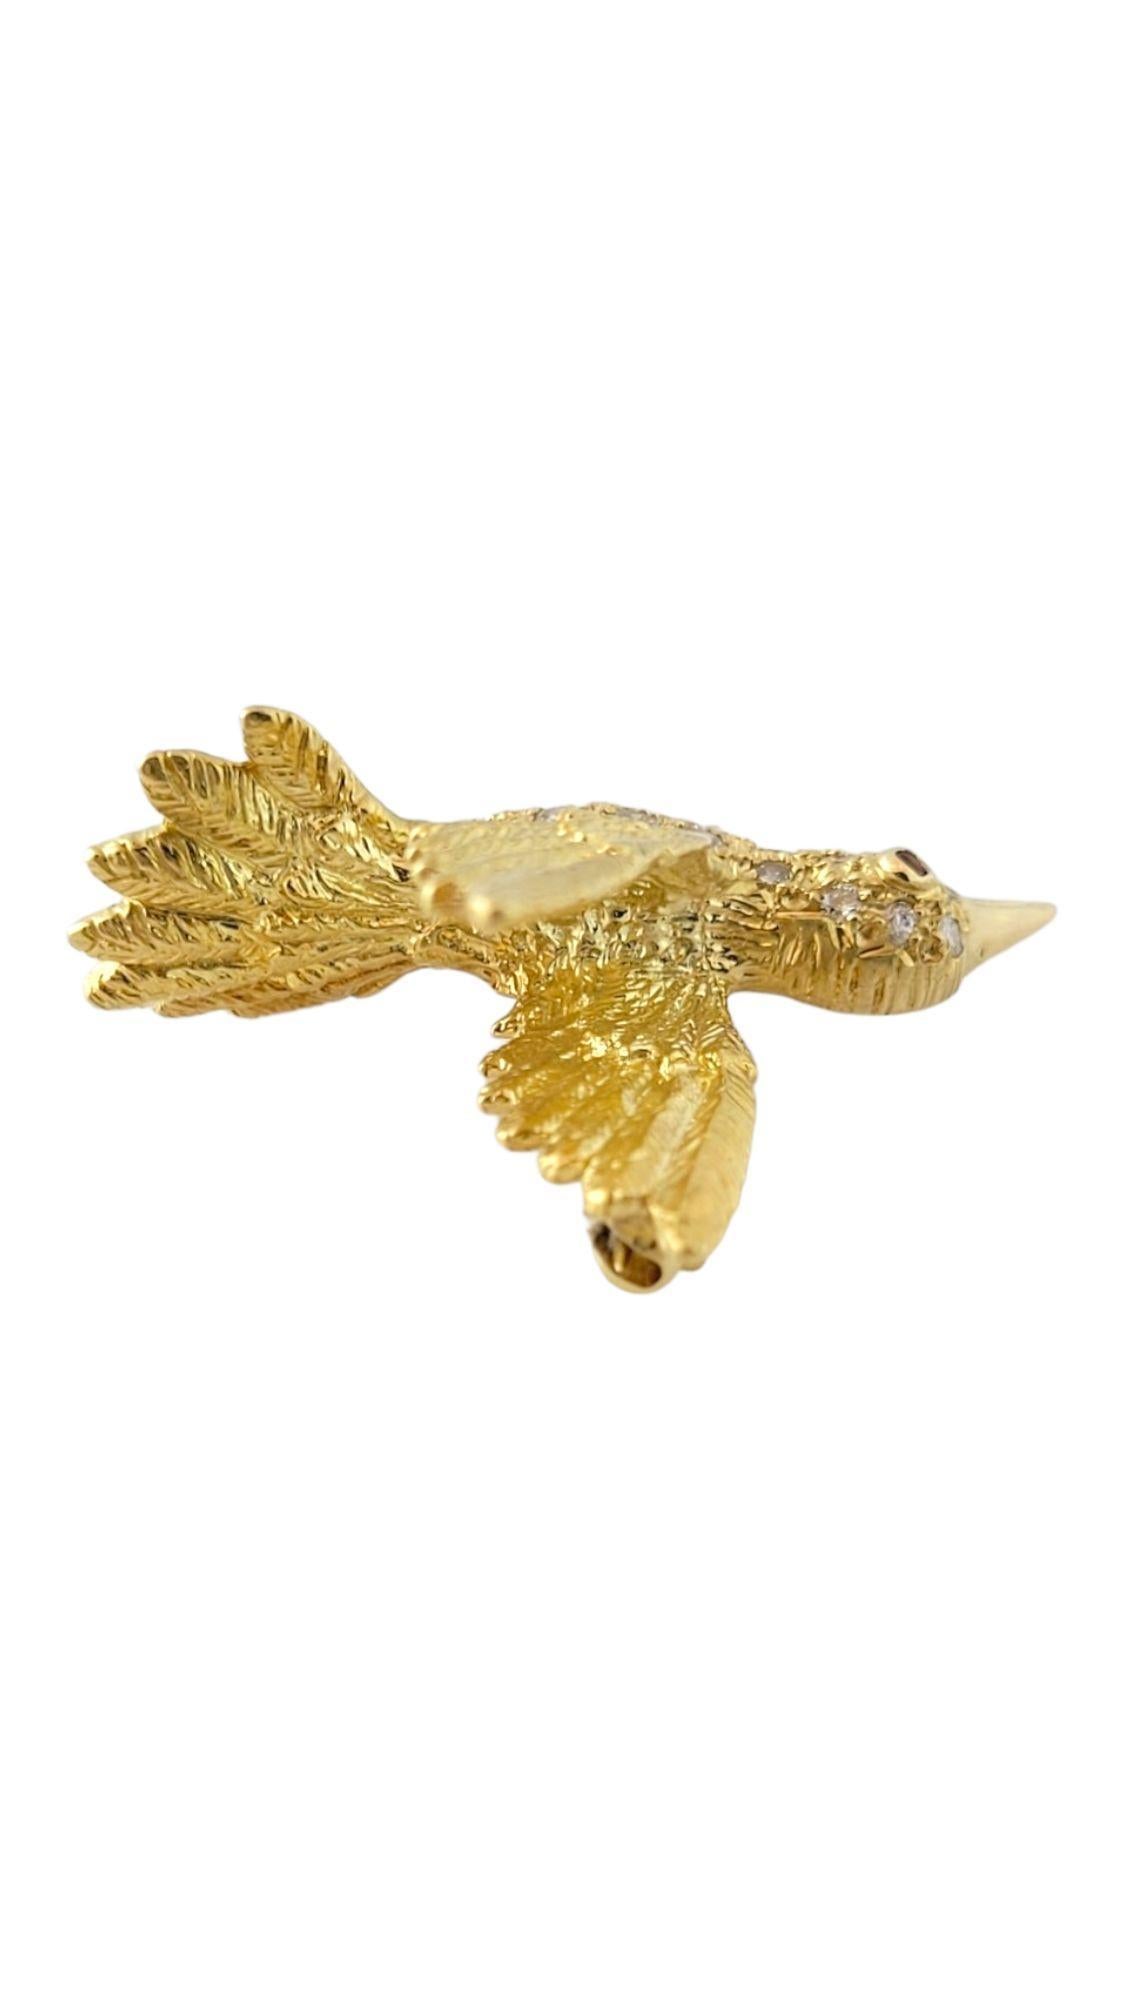 Brilliant Cut 18K Yellow Gold Diamond Hummingbird Pin #15020 For Sale